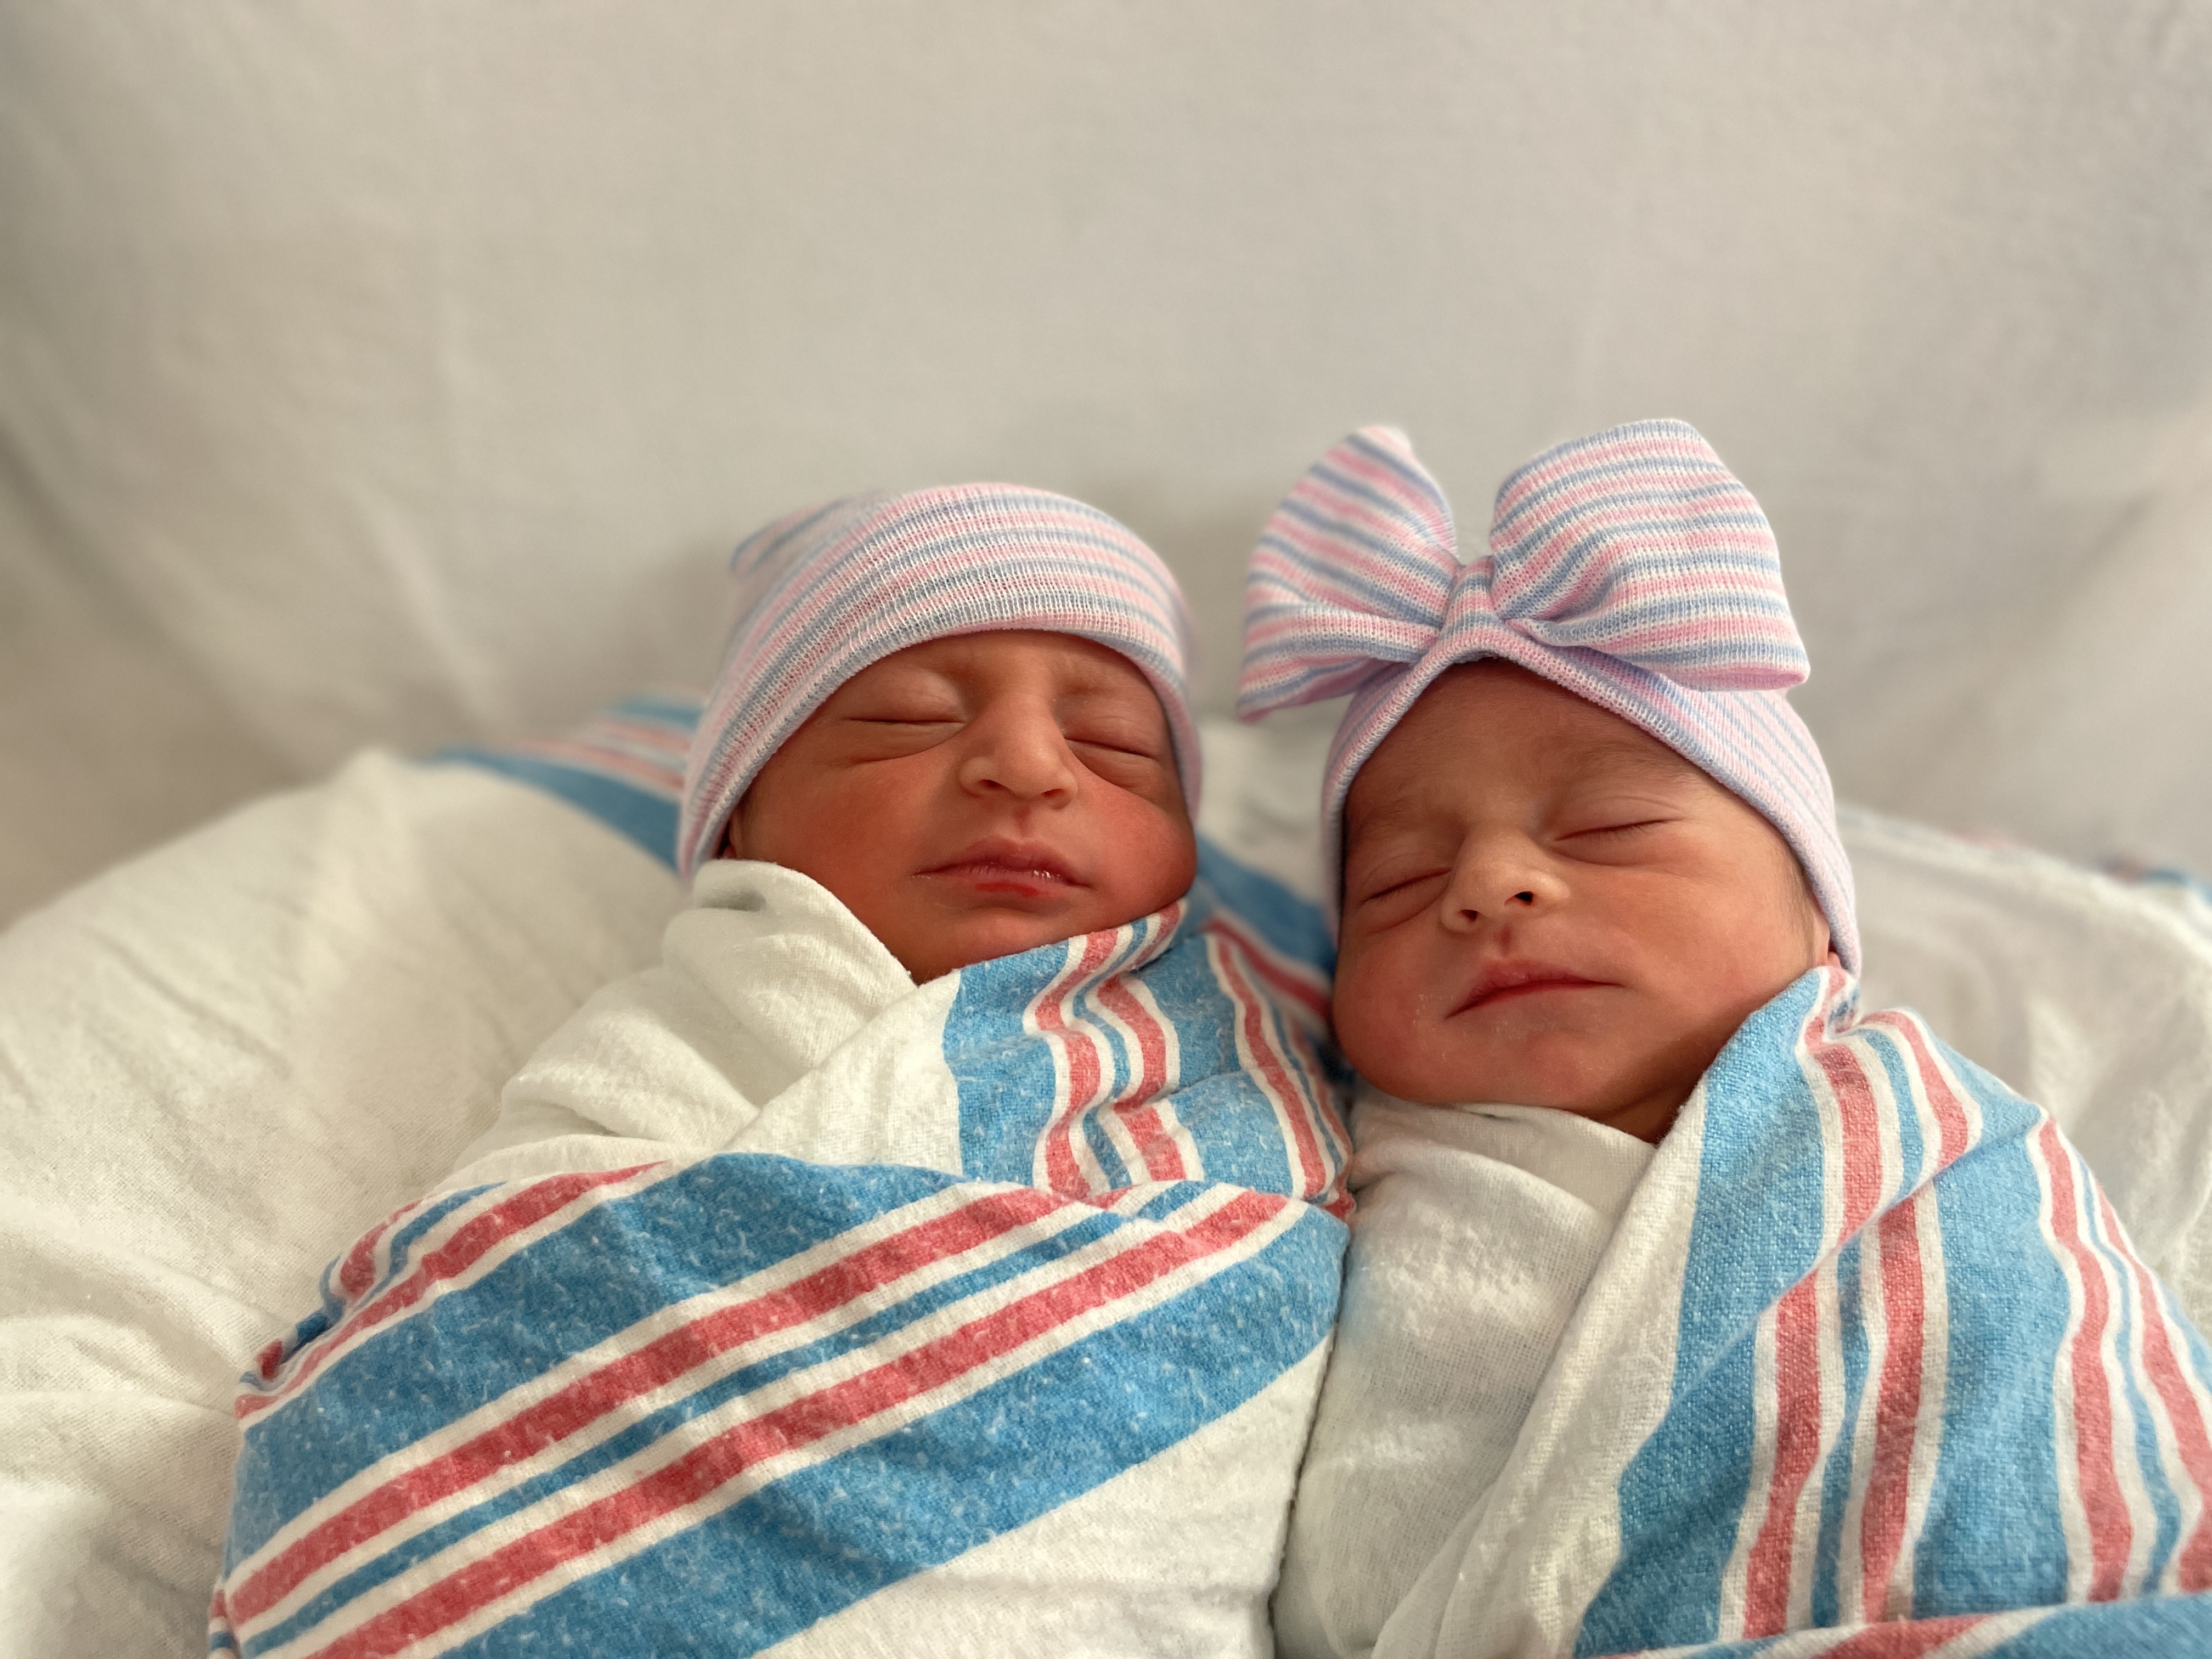 Twins born on 2-22-22